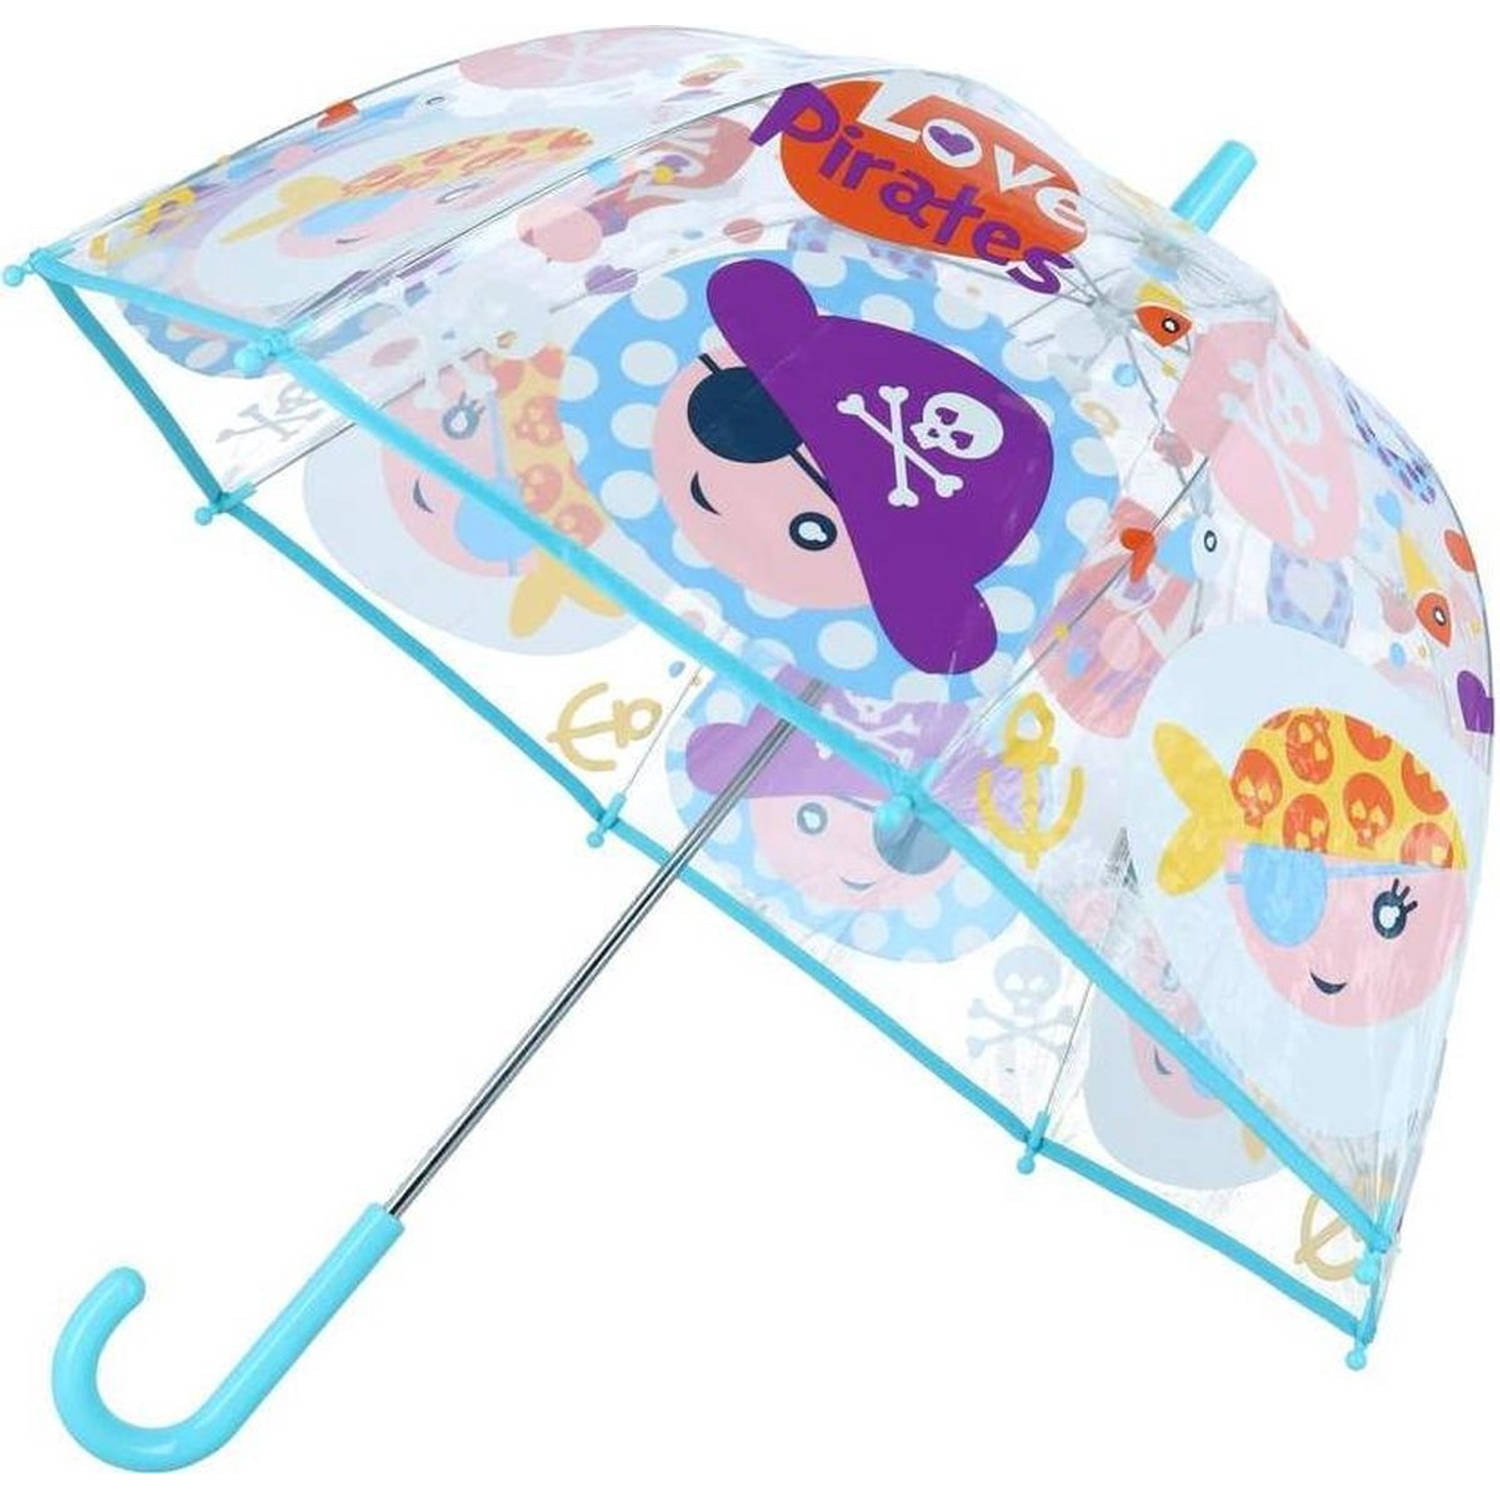 Kinderparaplu&apos;s - Pirates Kinderparaplu - Disney Kinderparaplu - Paraplu - Paraplu kopen - Paraplu kind - Paraplumerk -